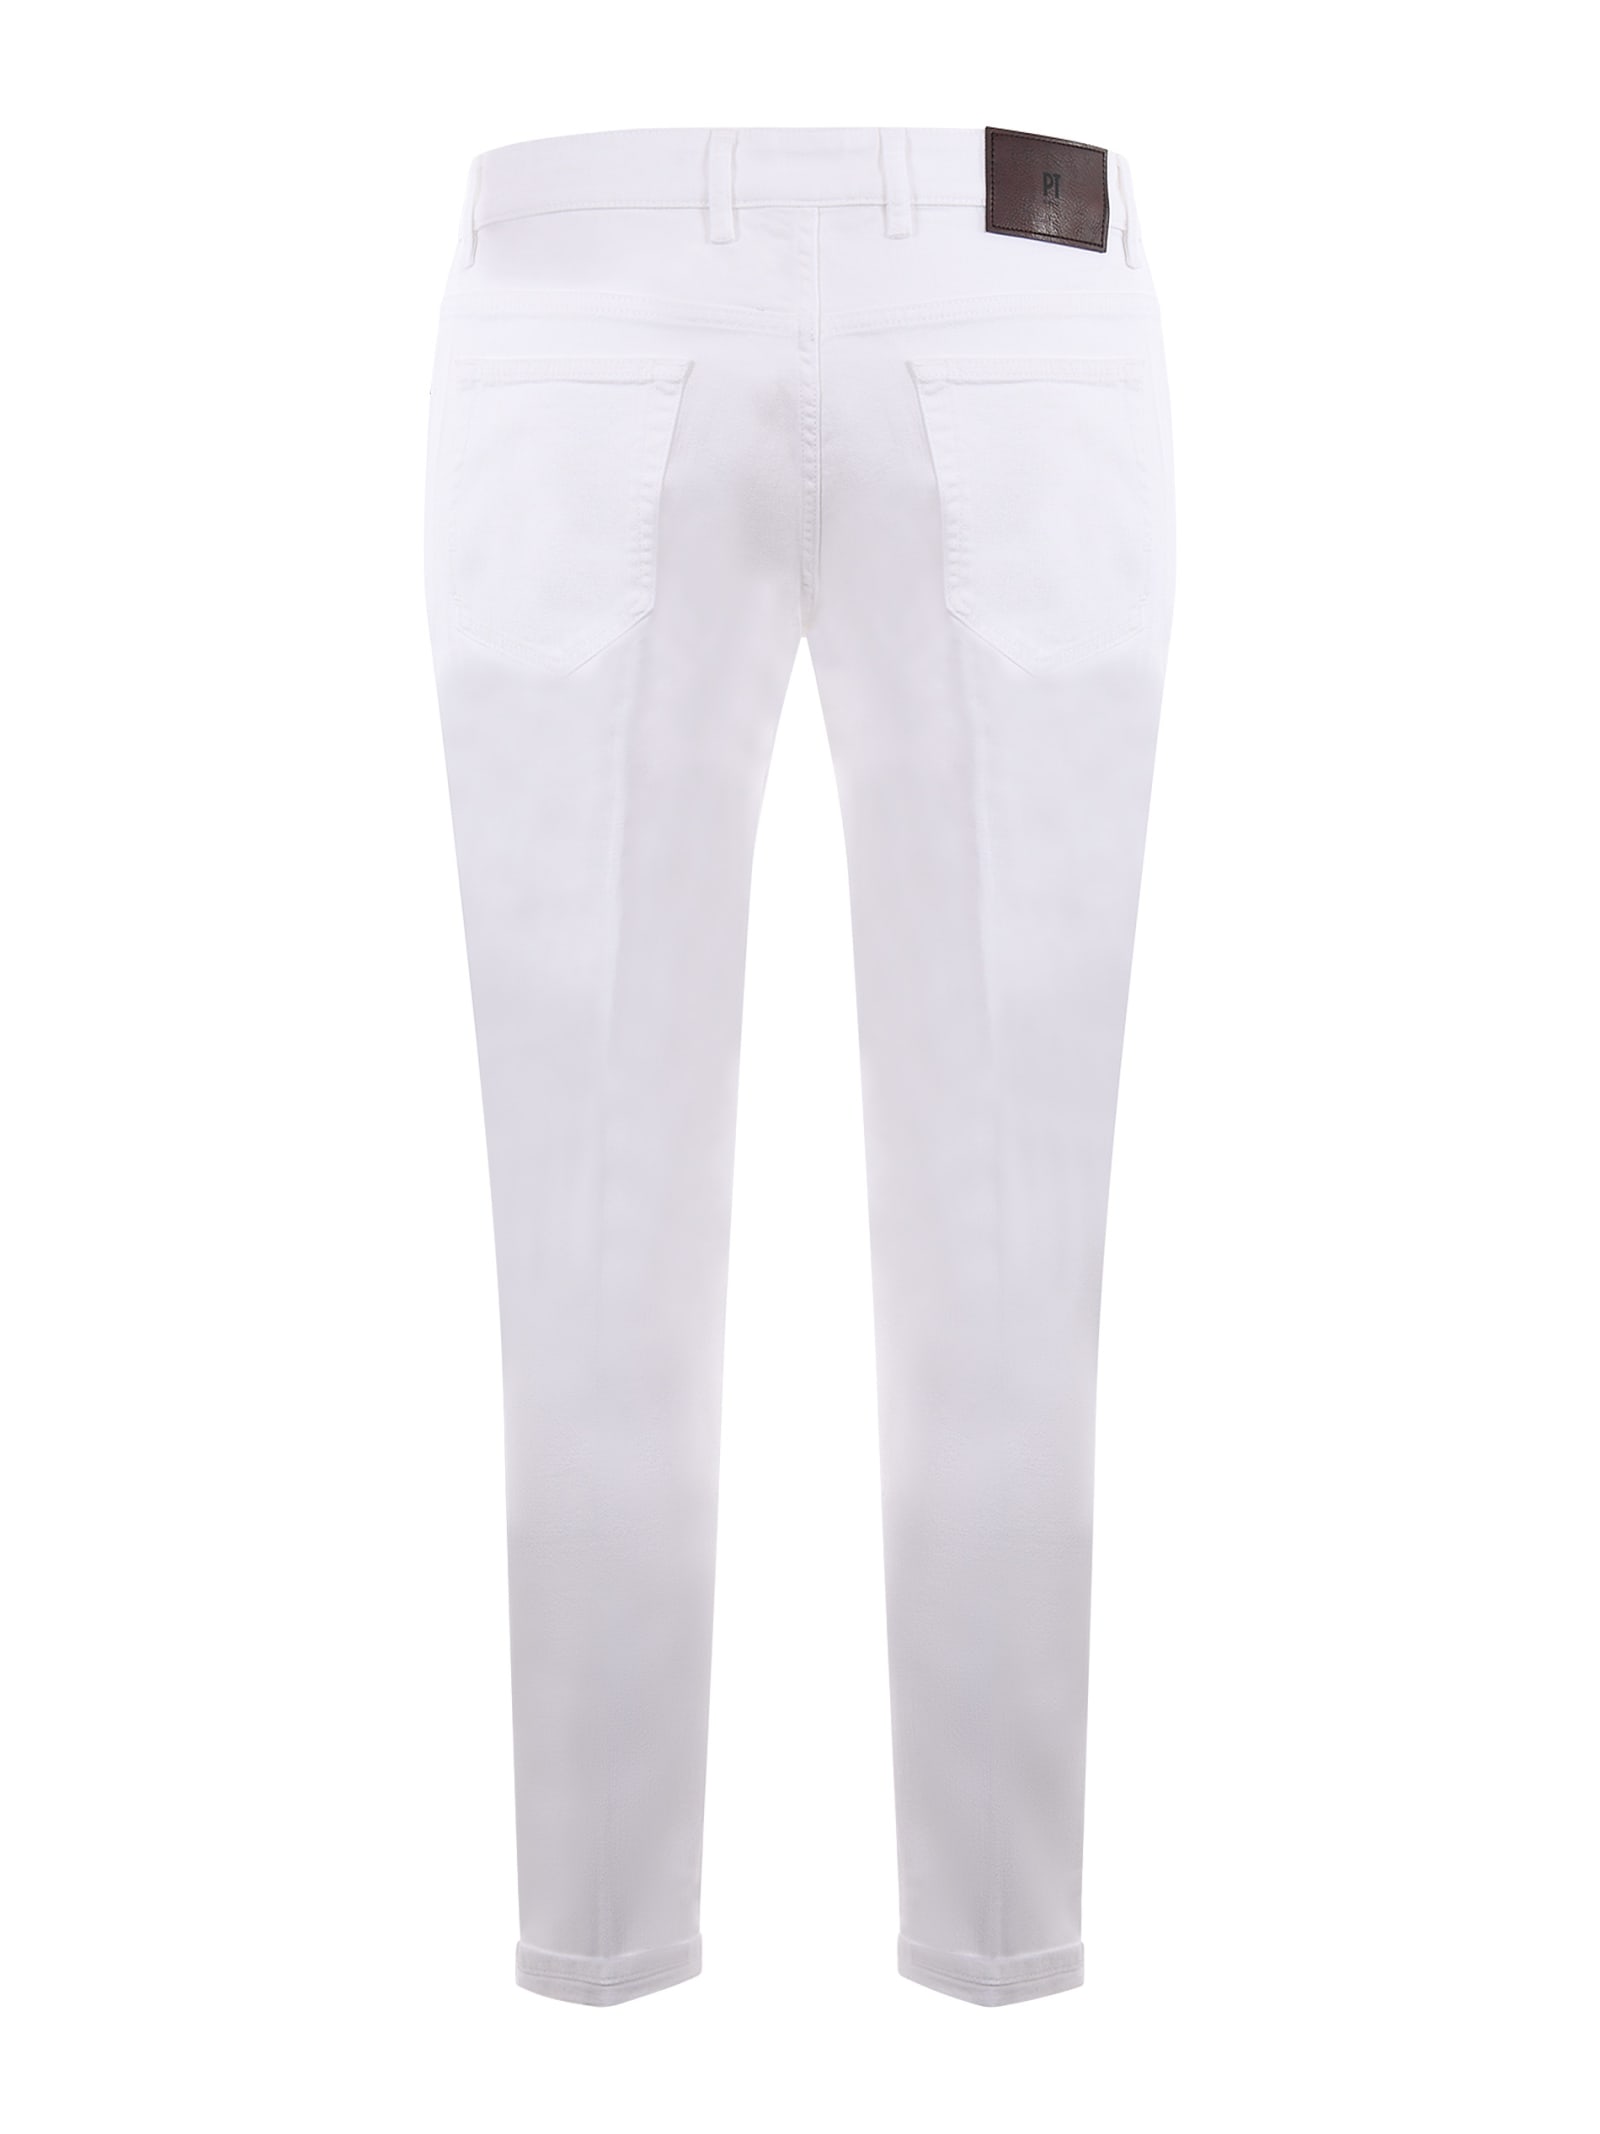 Shop Pt Torino Pt Denim Trousers In White